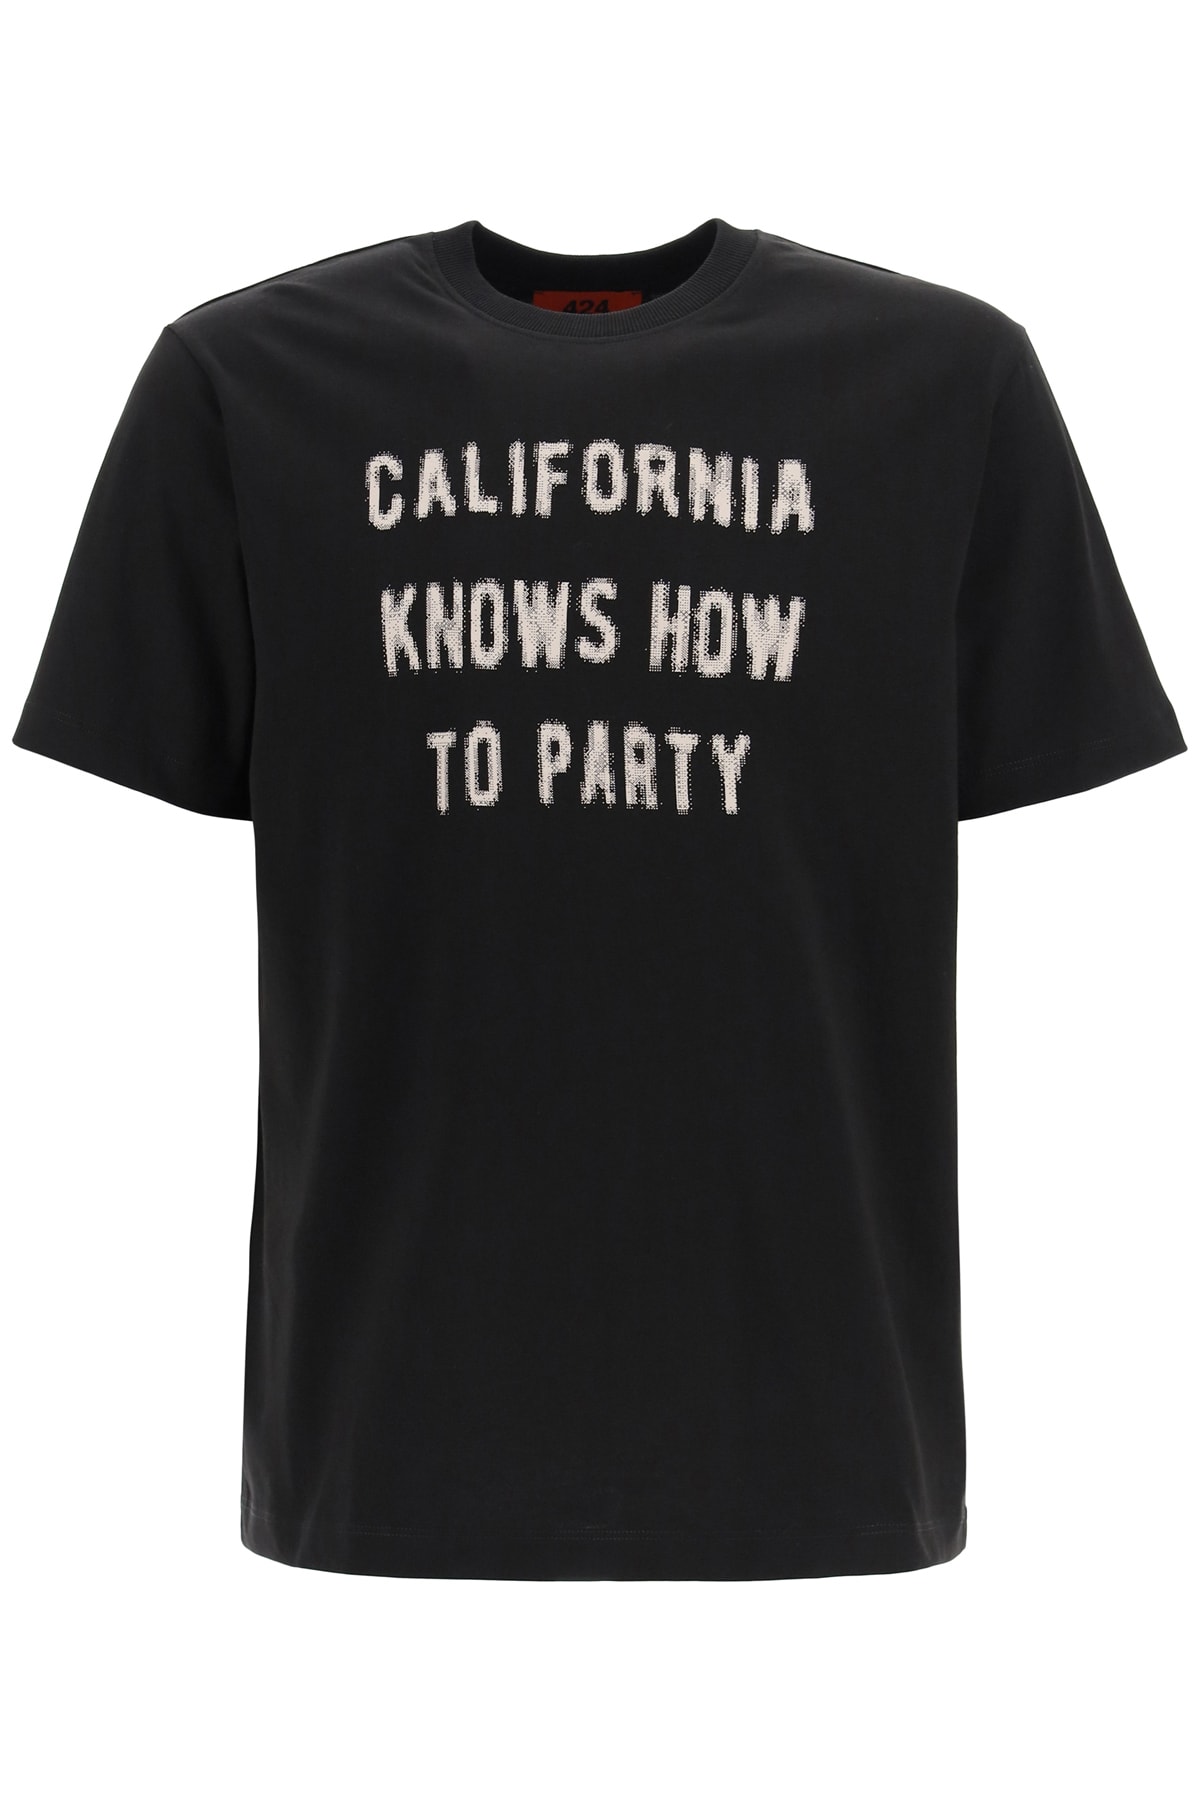 FourTwoFour on Fairfax California T-shirt